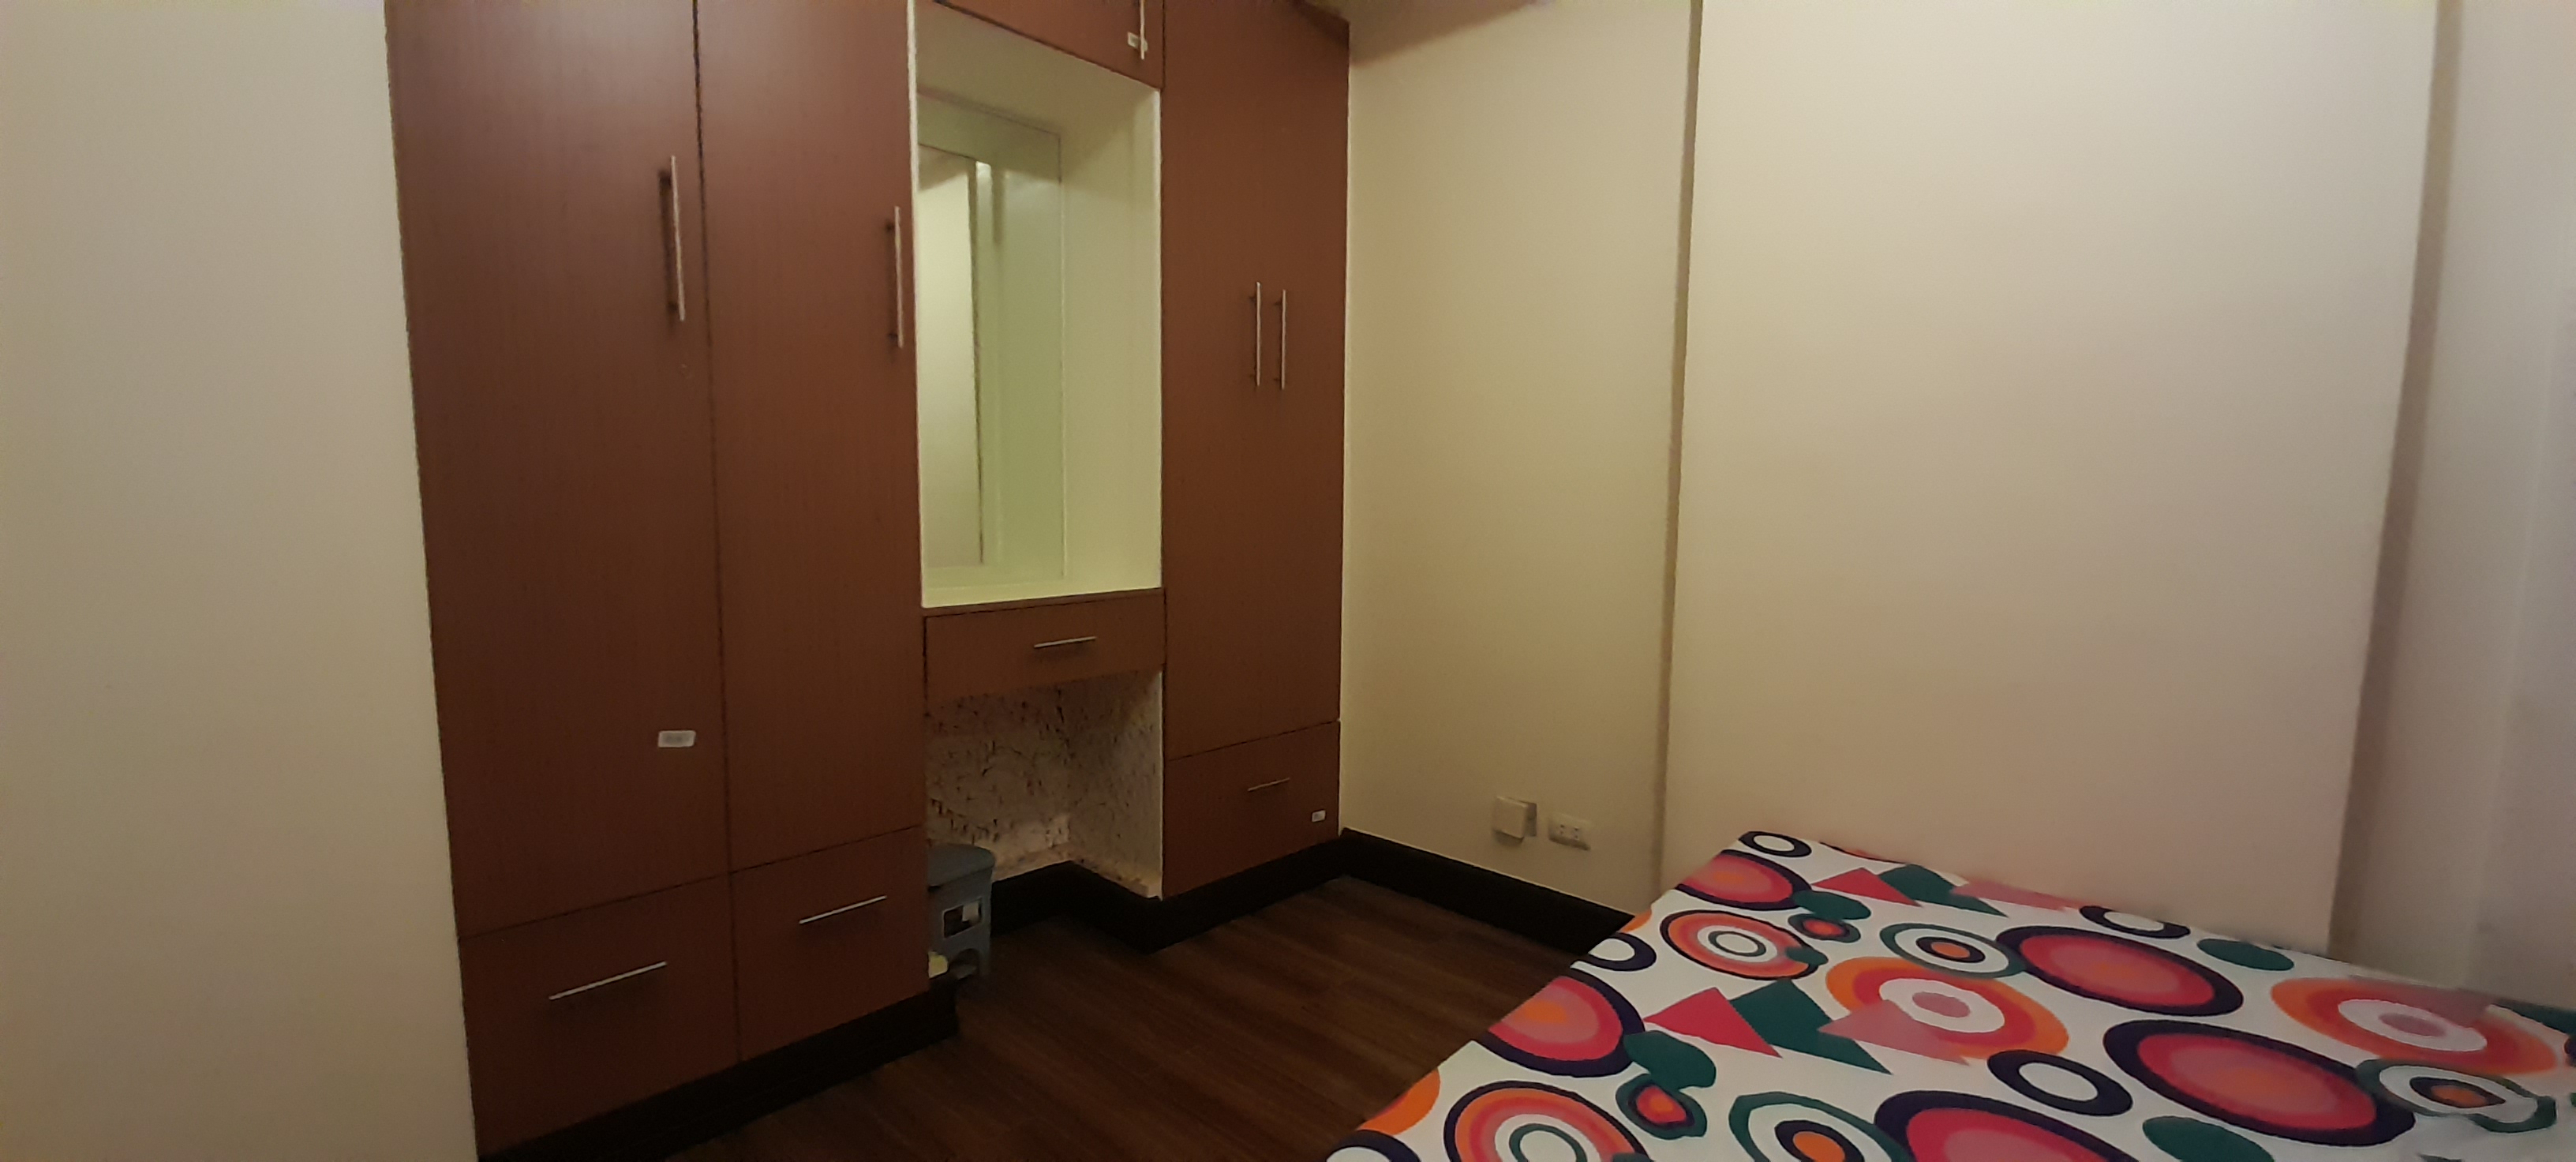 1-bedroom-furnished-condominium-at-grand-residences-mabolo-cebu-city-cebu